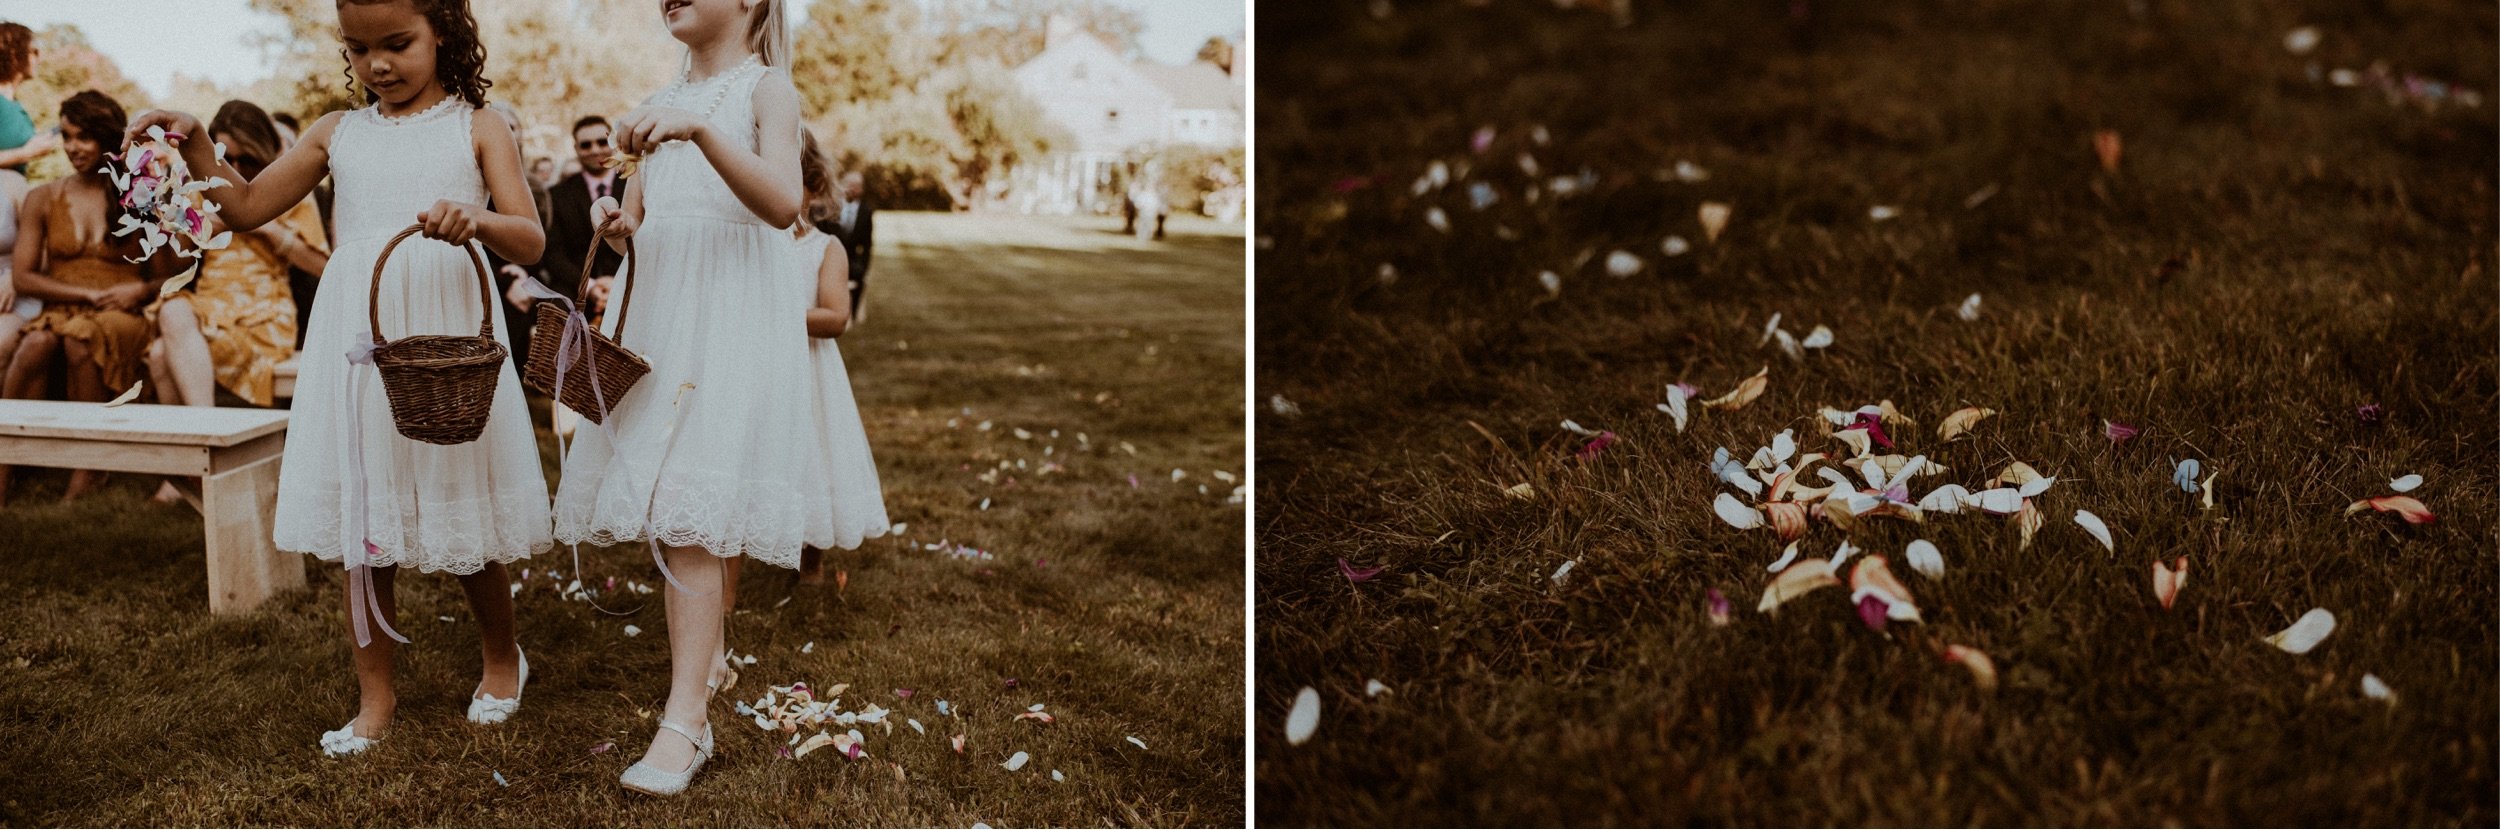 068_Gloriosa & Co Fall Wedding at The Curtis House Ashfield MA - Vanessa Alves Photography.jpg